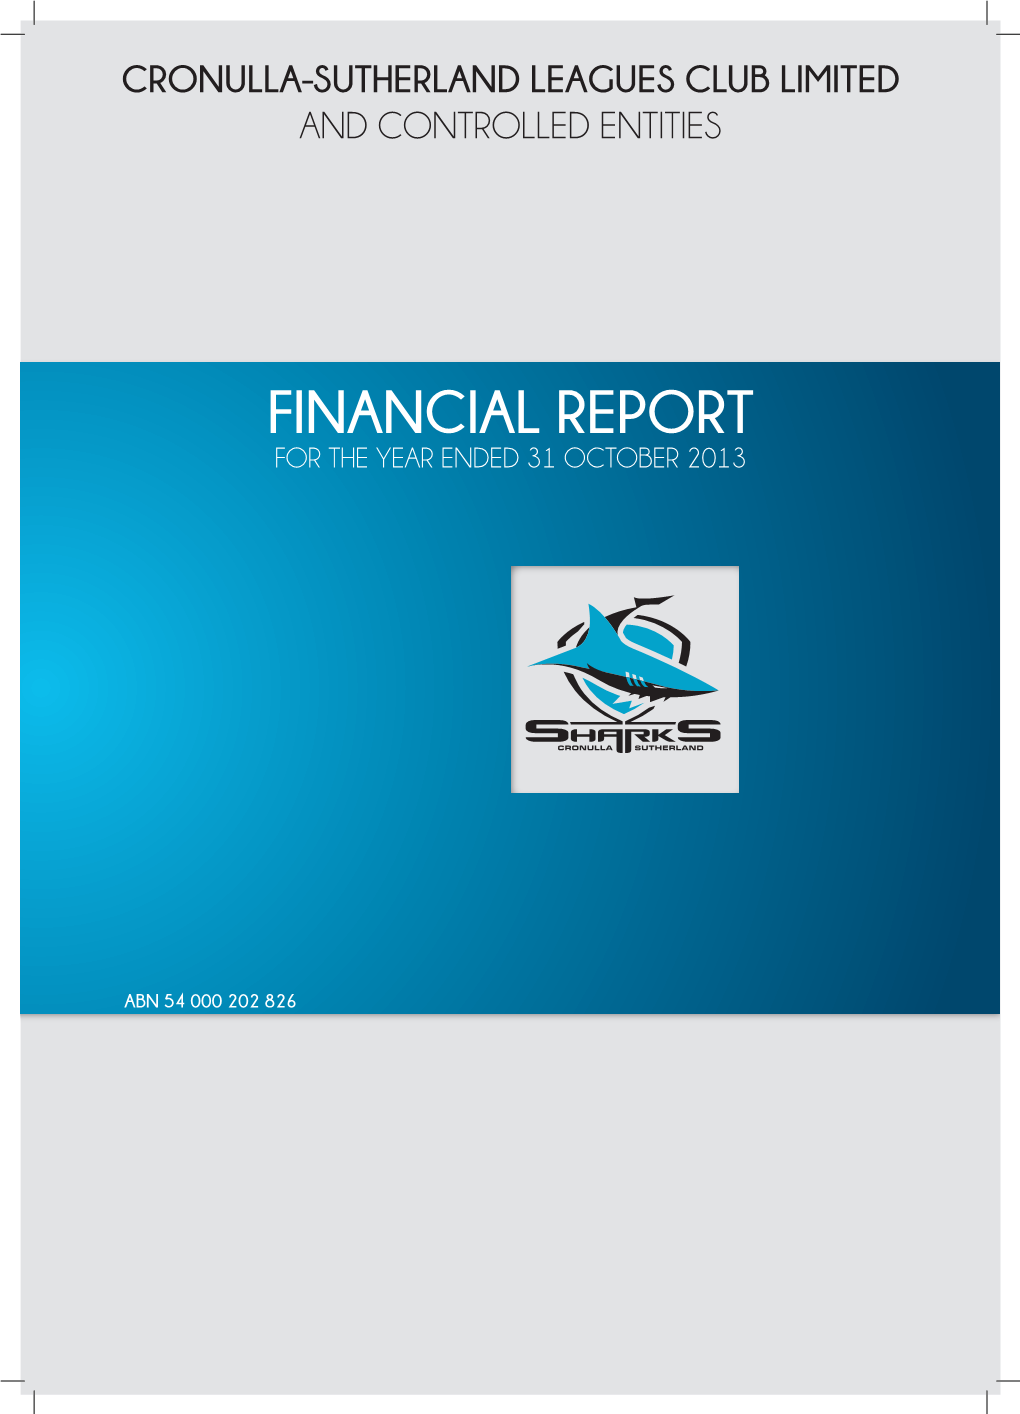 Cronulla Sharks 2013 Annual Report